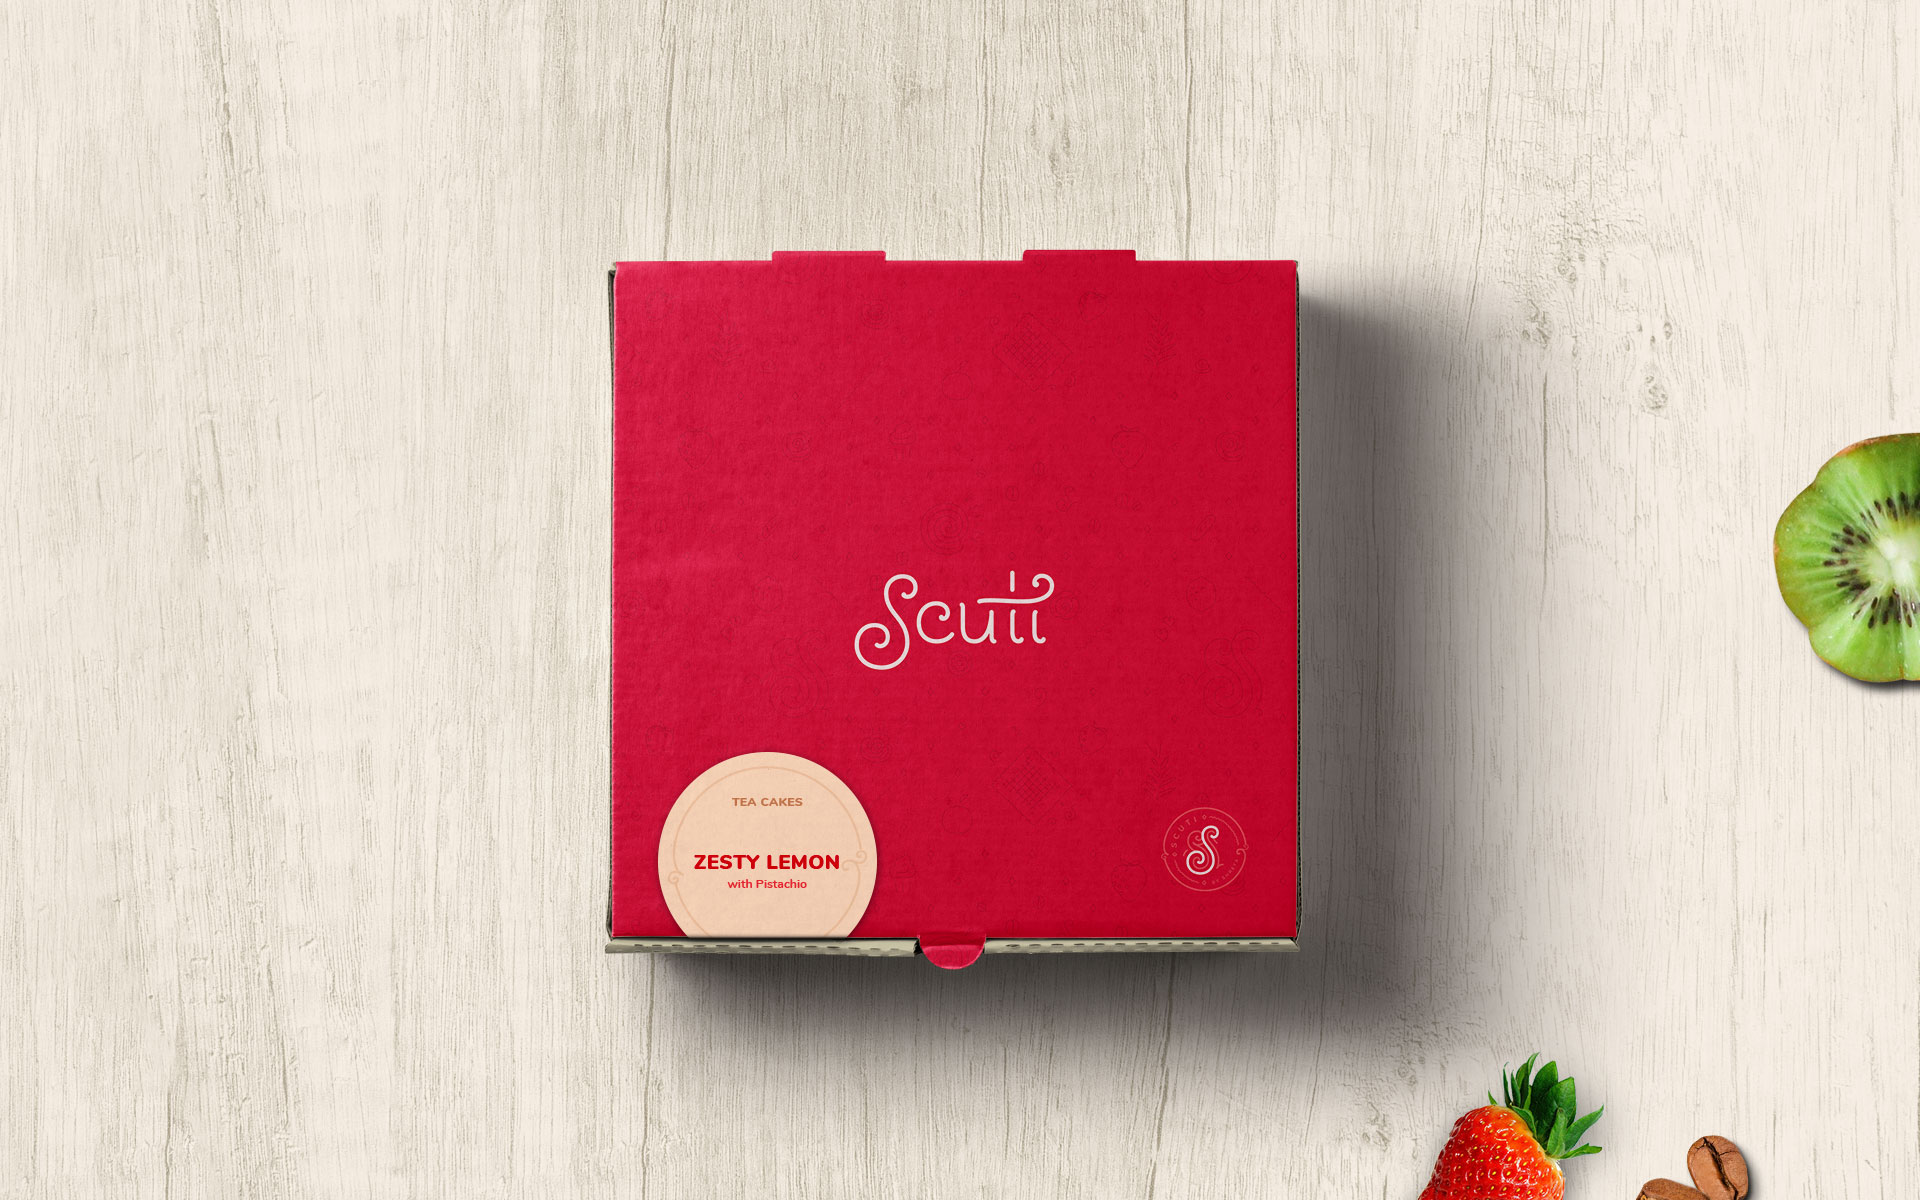 Scuti - Gourmet Desserts & Chocolates - Identity Design - Zesty Lemon Packaging